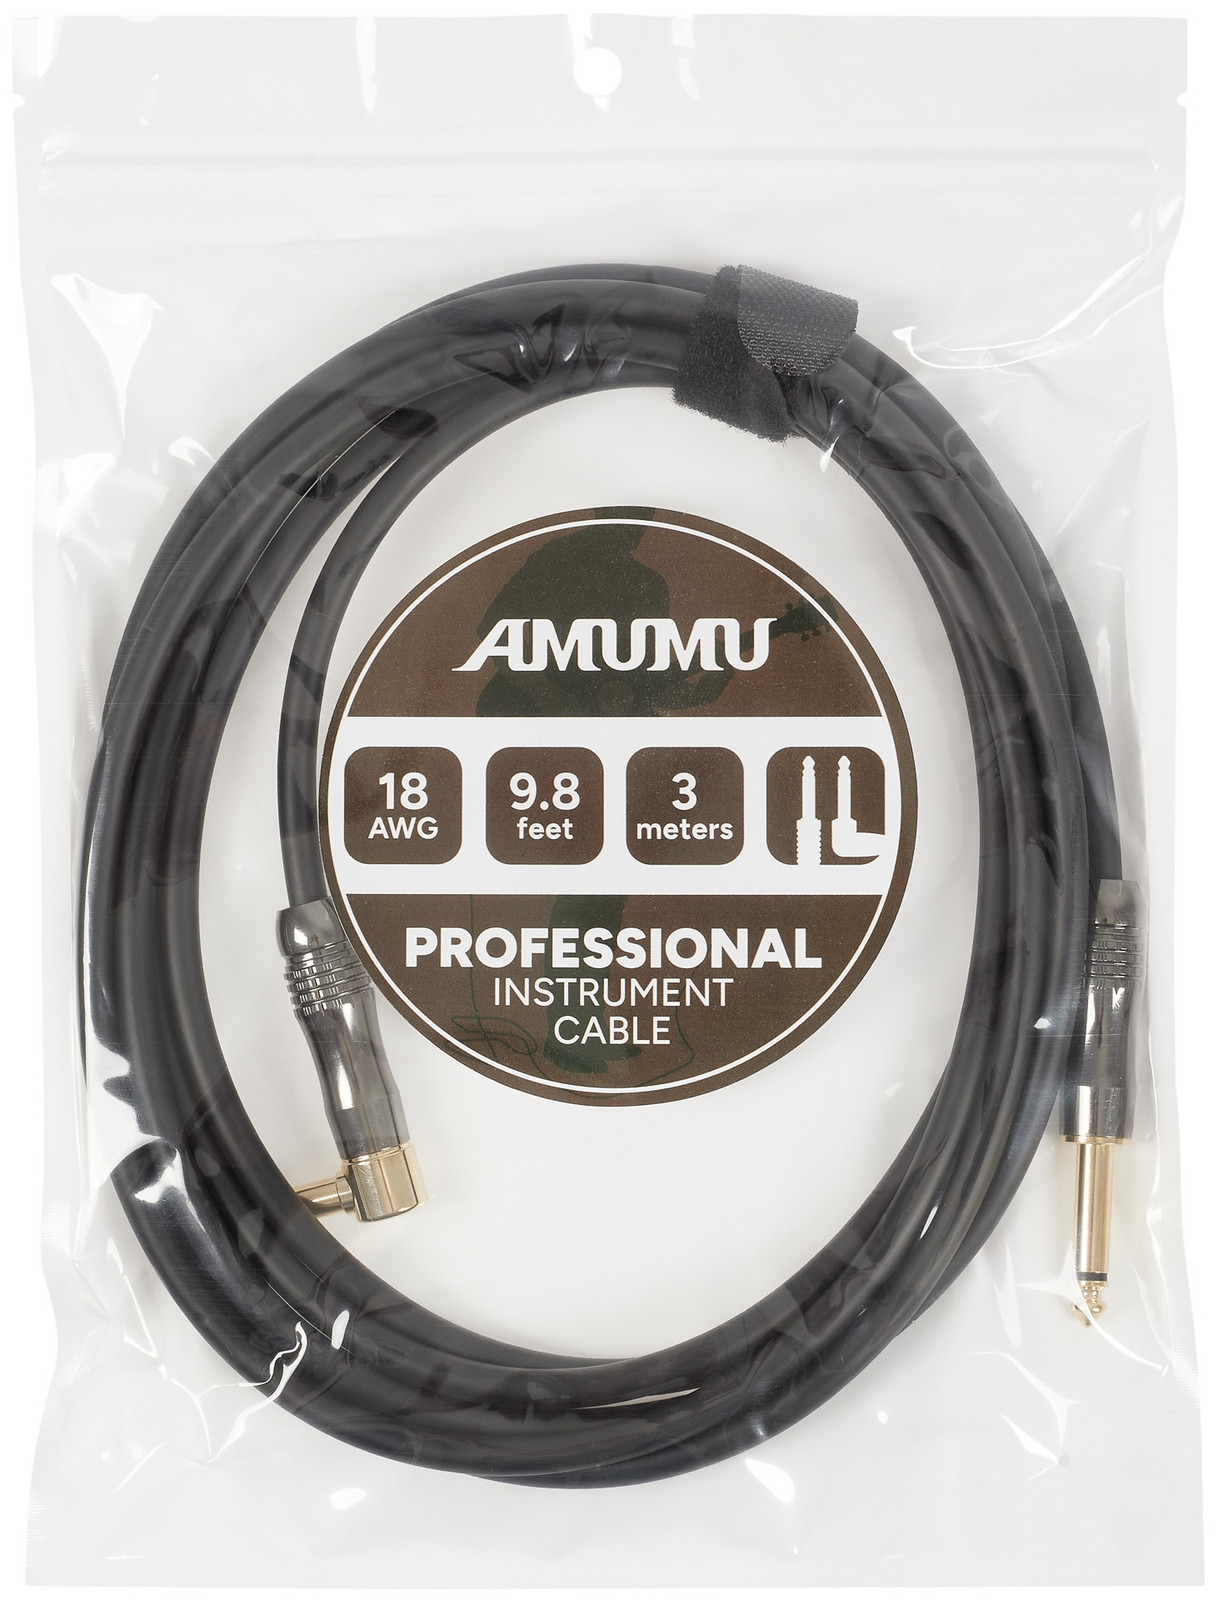 Amumu P4-SA-3M Professional Instrument Cable